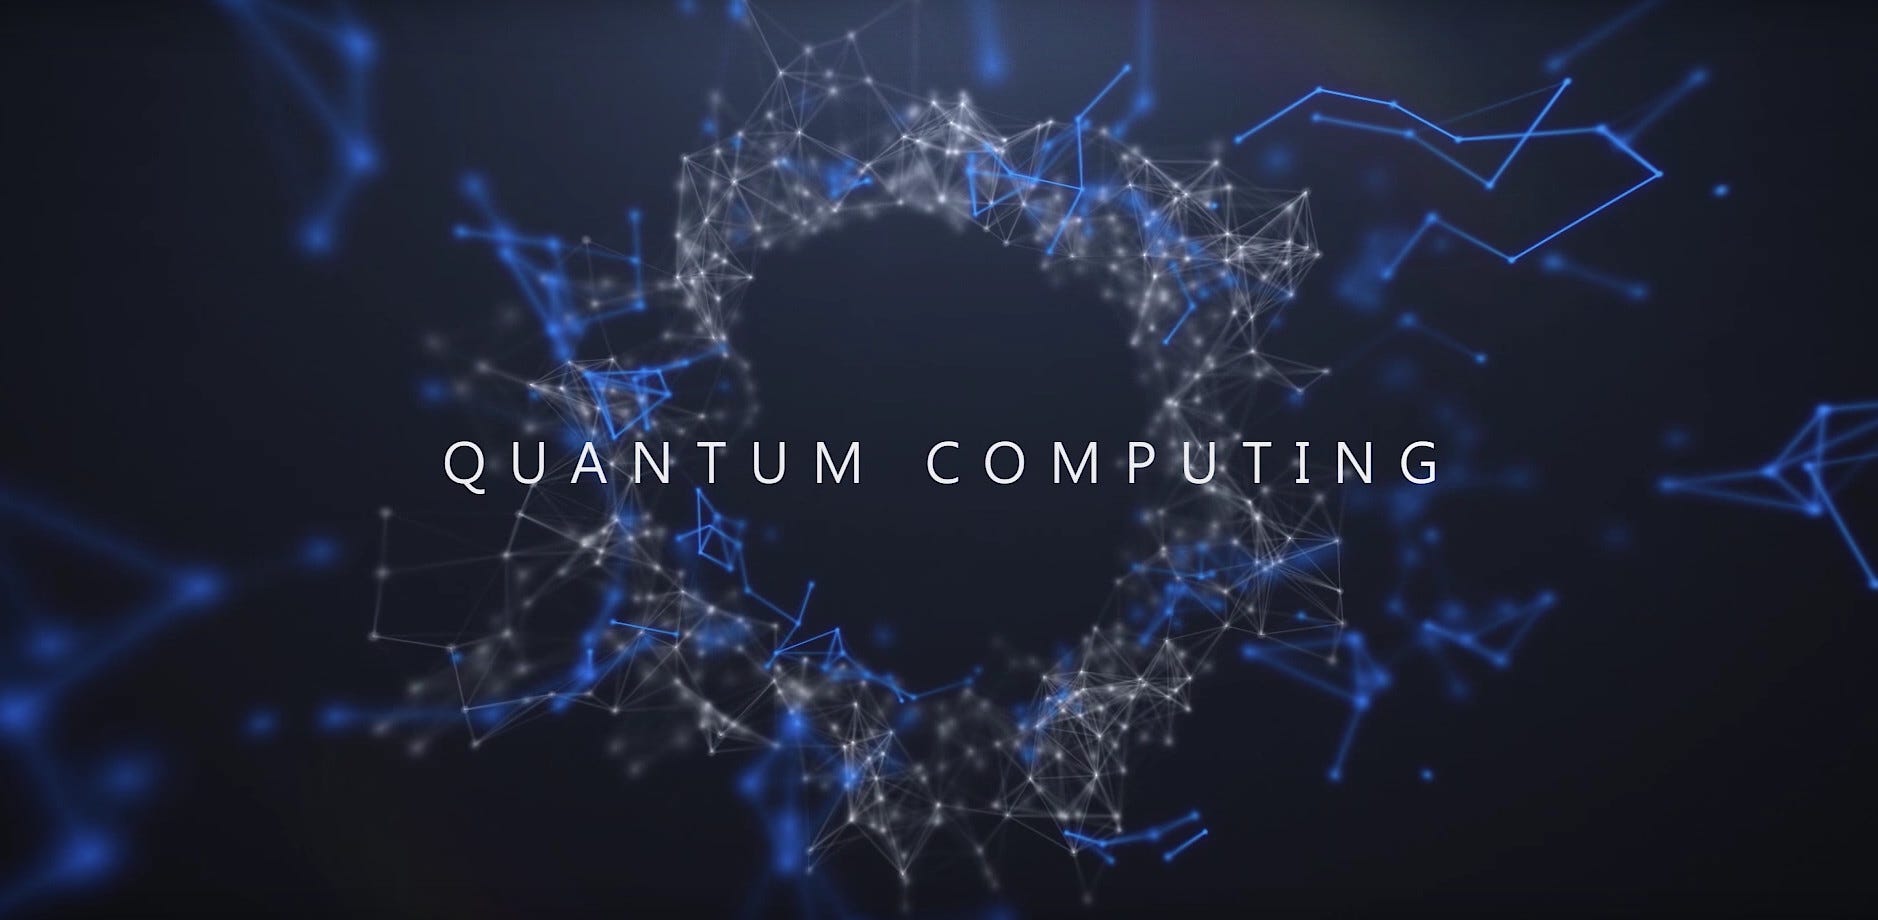 IS Quantum Computing the Next Trillion Dollar Industry